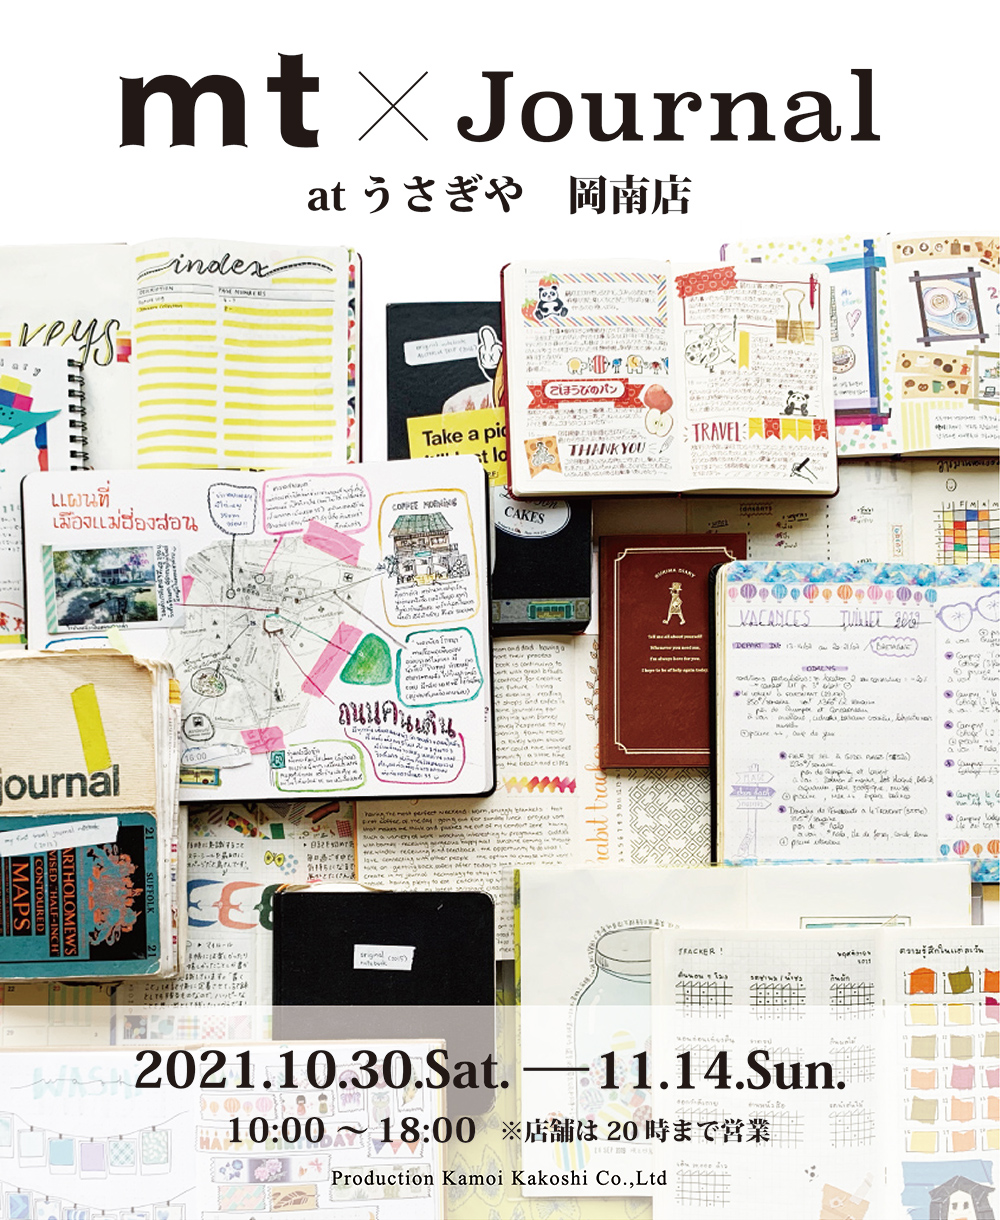 『mt×Journal atうさぎや岡南店』 開催